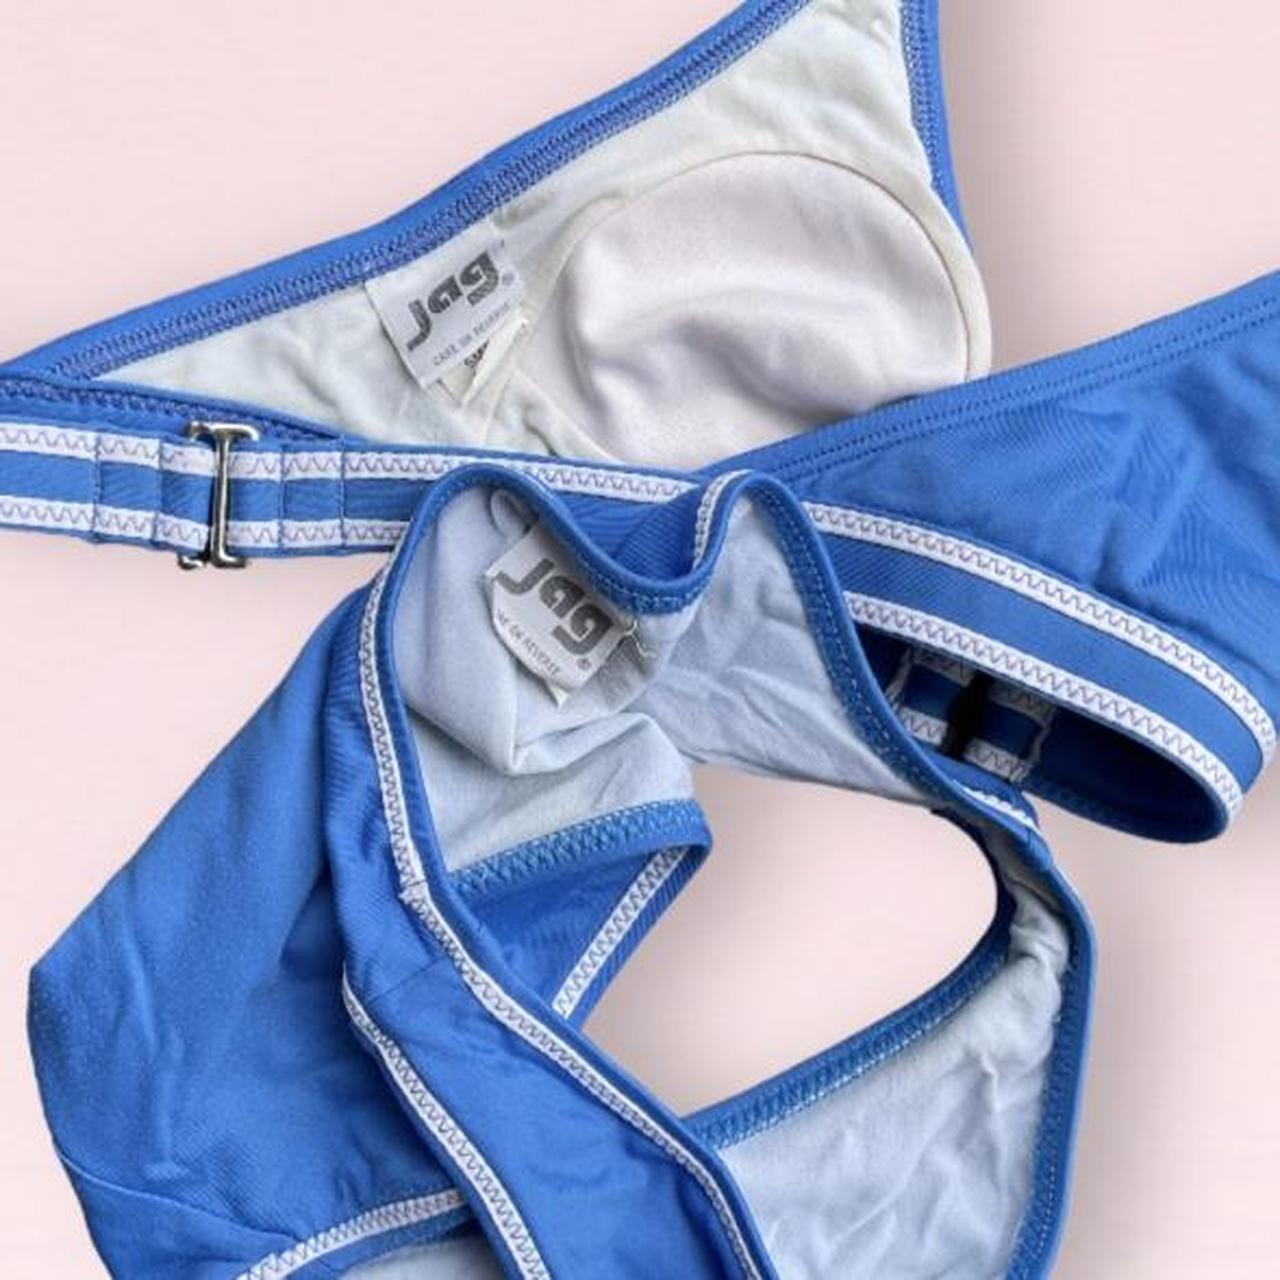 JAG Women's Blue and White Bikinis-and-tankini-sets (6)